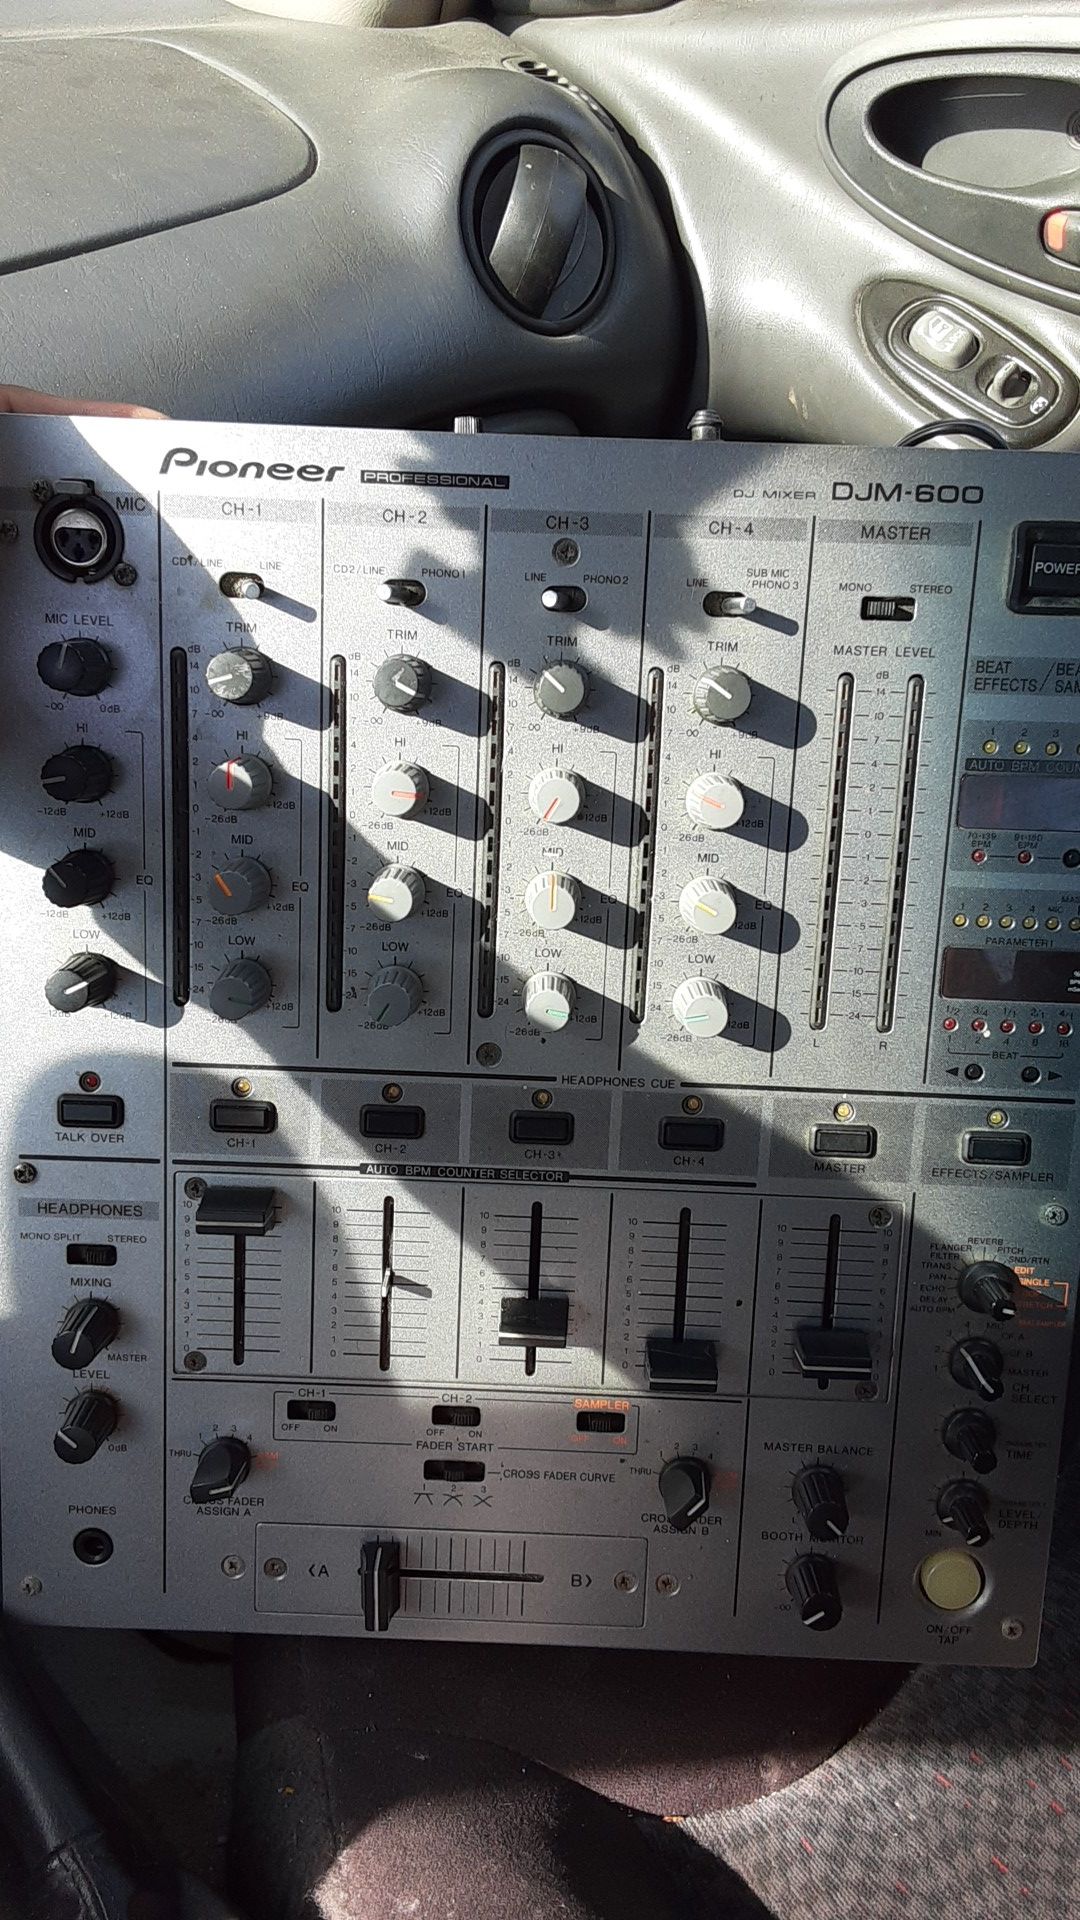 Pioneer professional DJ mixer model number djm 600